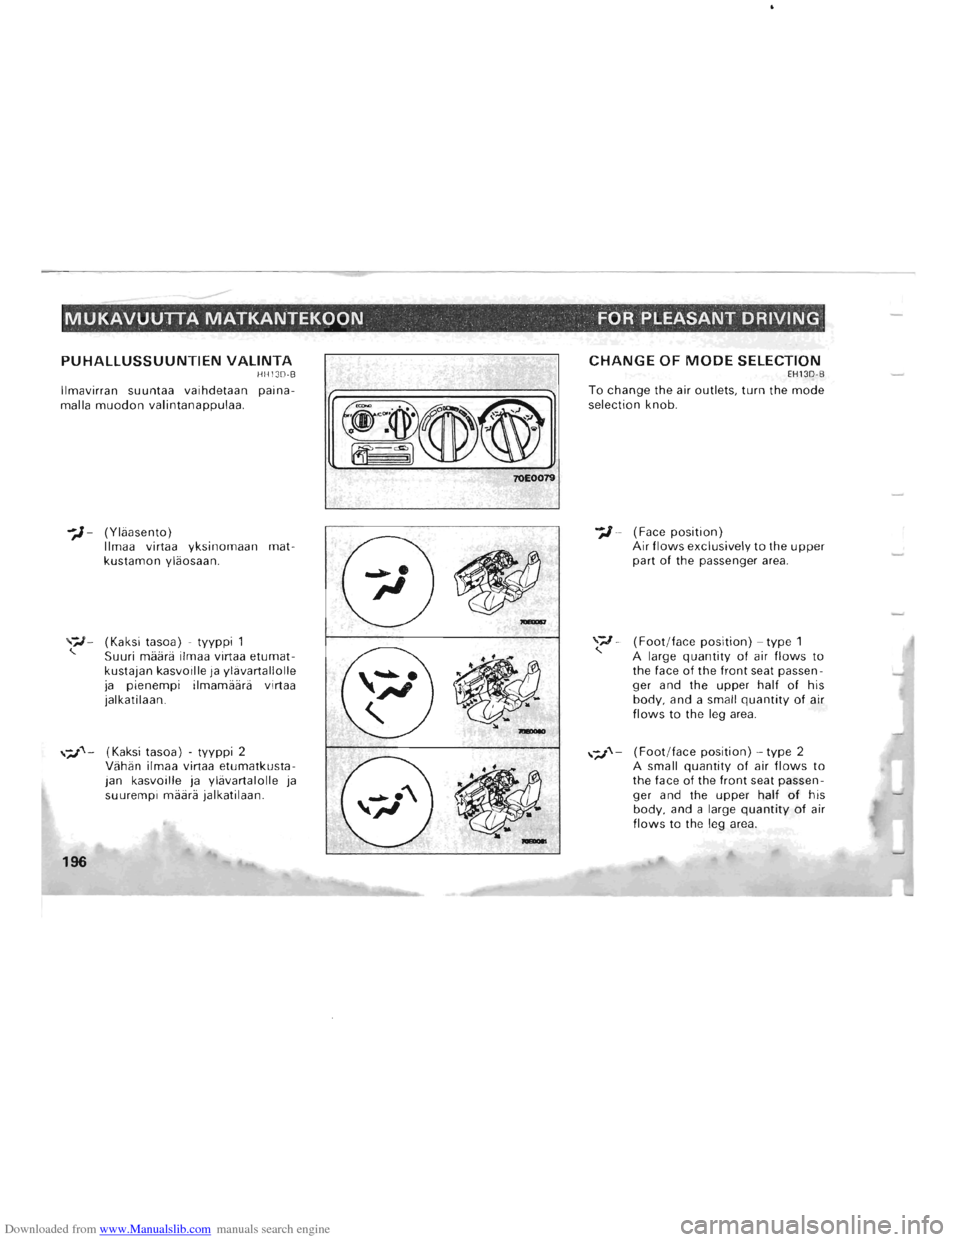 MITSUBISHI PAJERO 1996 2.G Owners Manual Downloaded from www.Manualslib.com manuals search engine MUKAVUUTTA MATKANTEKOON FOR PLEASANT DRIVING 
PUHALLUSSUUNTIEN VALINTA HH13D·B 
Ilmavirran  suuntaa vaihdetaan  paina­
malla muodon valintana